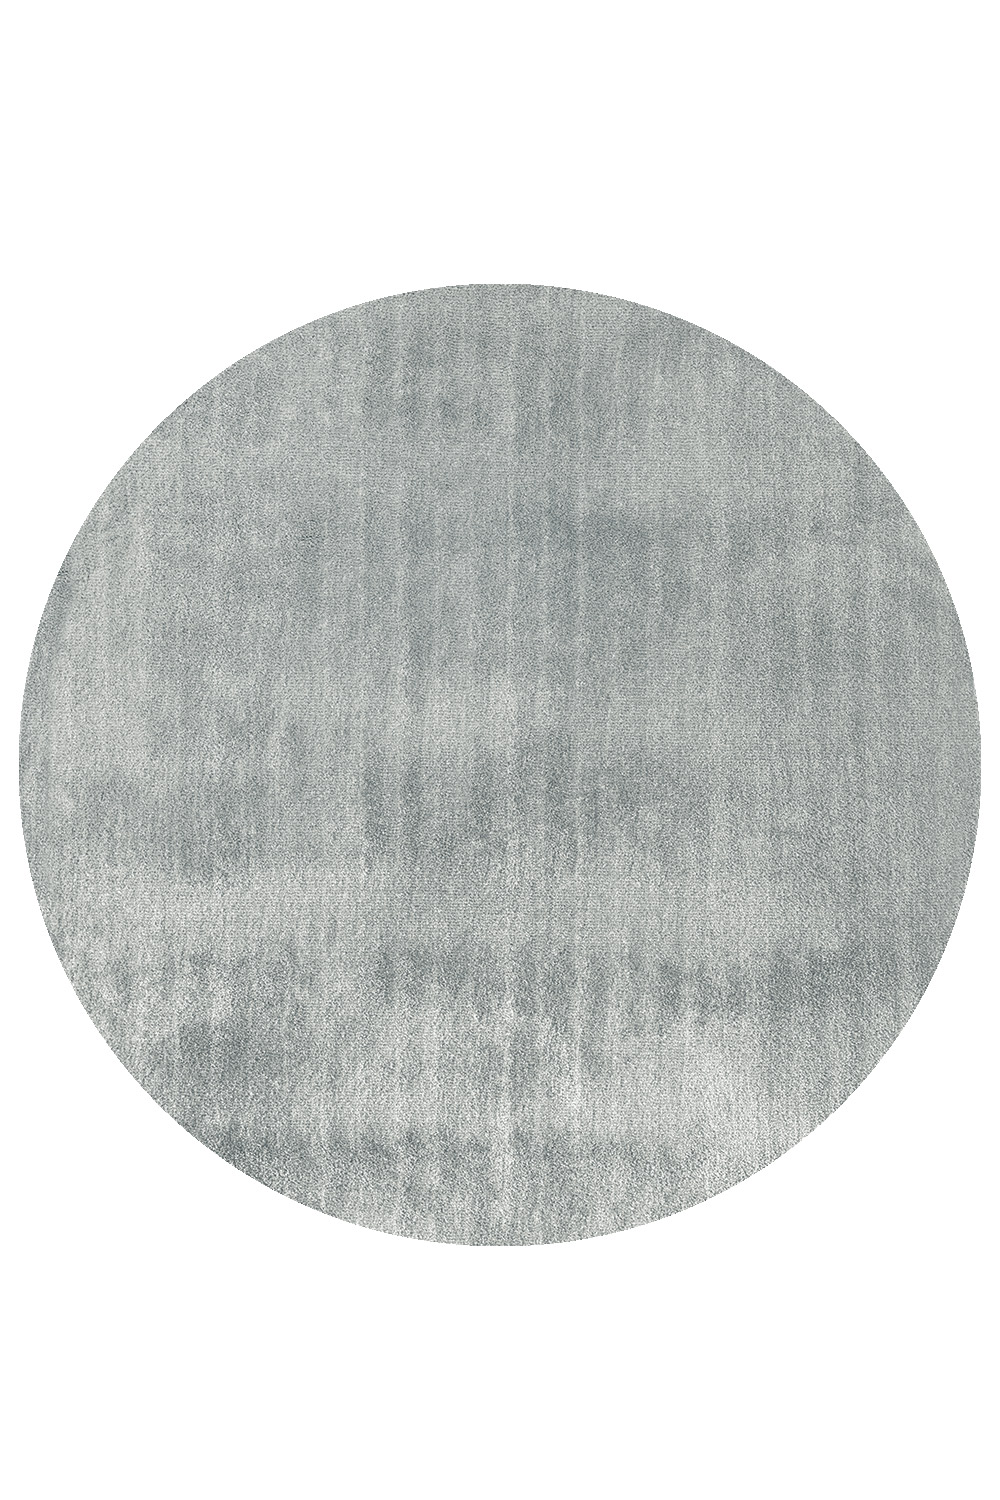 Kusový koberec Labrador 060 L.Grey - kruh Ø 120 cm